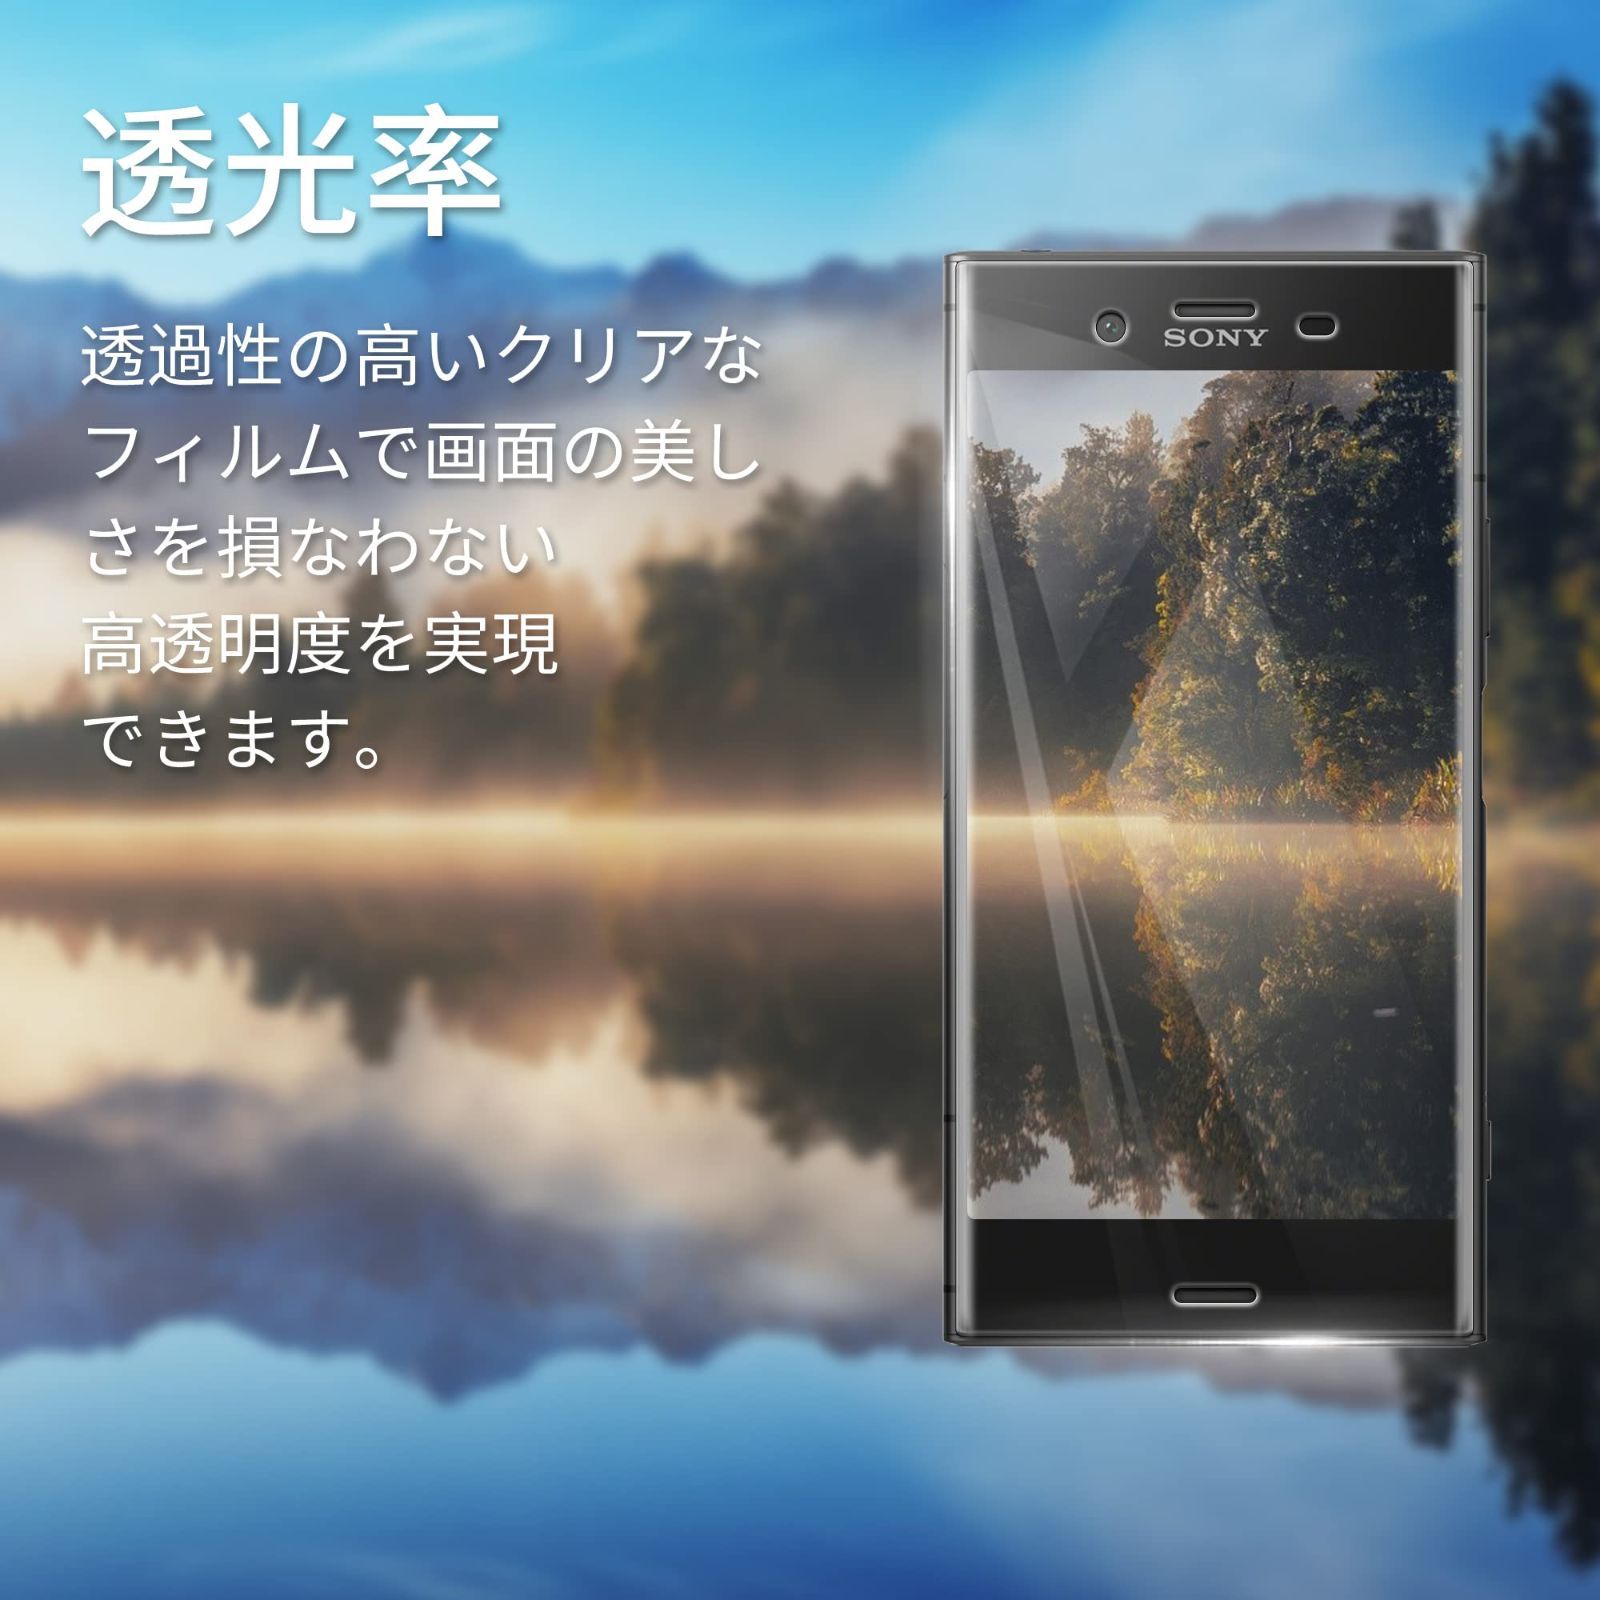 Sony Xperia XZ1 Compact ガラスフィルム Sony エクスペリア XZ1 Compact SO-02K フィルム 専用 強化ガラスフィルム 3D曲面保護 硬度9H 透過率99% 自動吸着 指紋防止 気泡なし 飛散防止処理 クリア